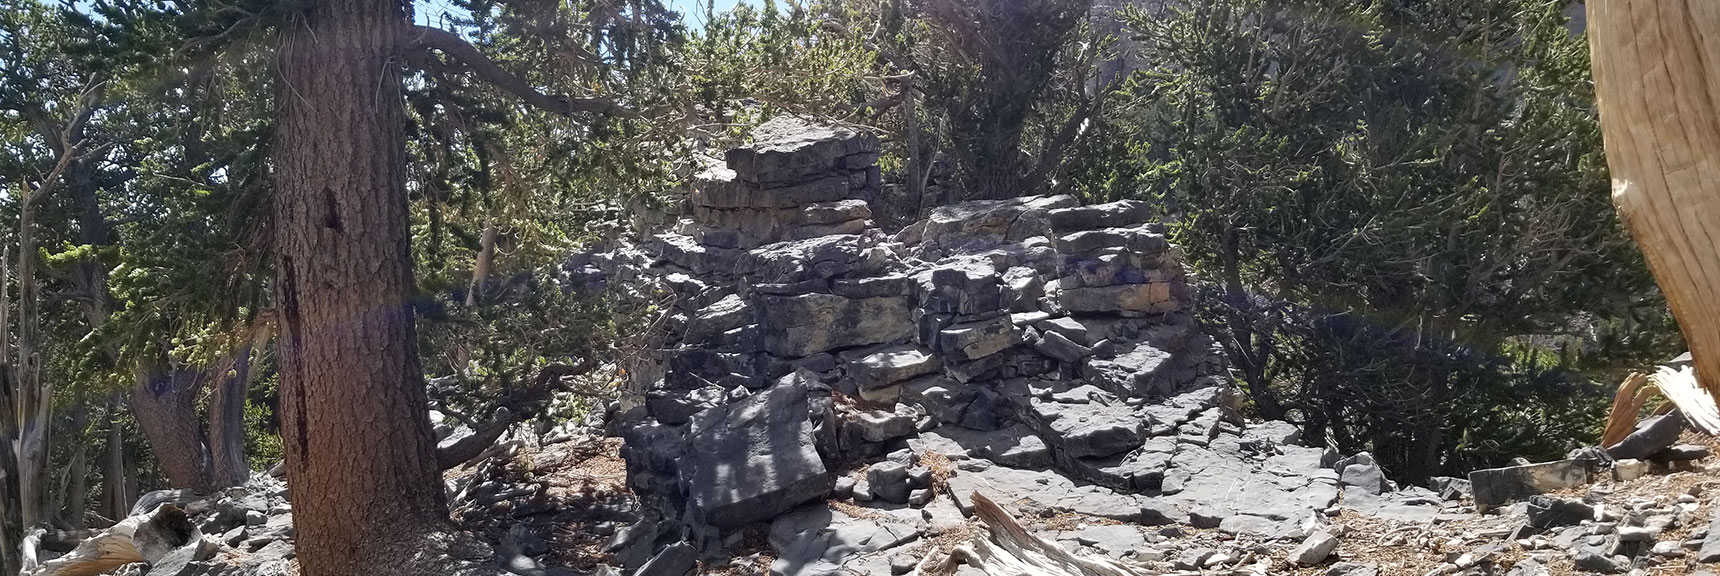 More Beautiful Brick Upon Brick Limestone Pillars Nearing Mummy's Toe Summit Approach.| Grand Circuit Loop Cougar Ridge Trail, Mummy Mountain Knees | Mummy Mountain Toe | Mummy Springs | Raintree | Fletcher Peak | Mt Charleston Wilderness | Spring Mountains, Nevada